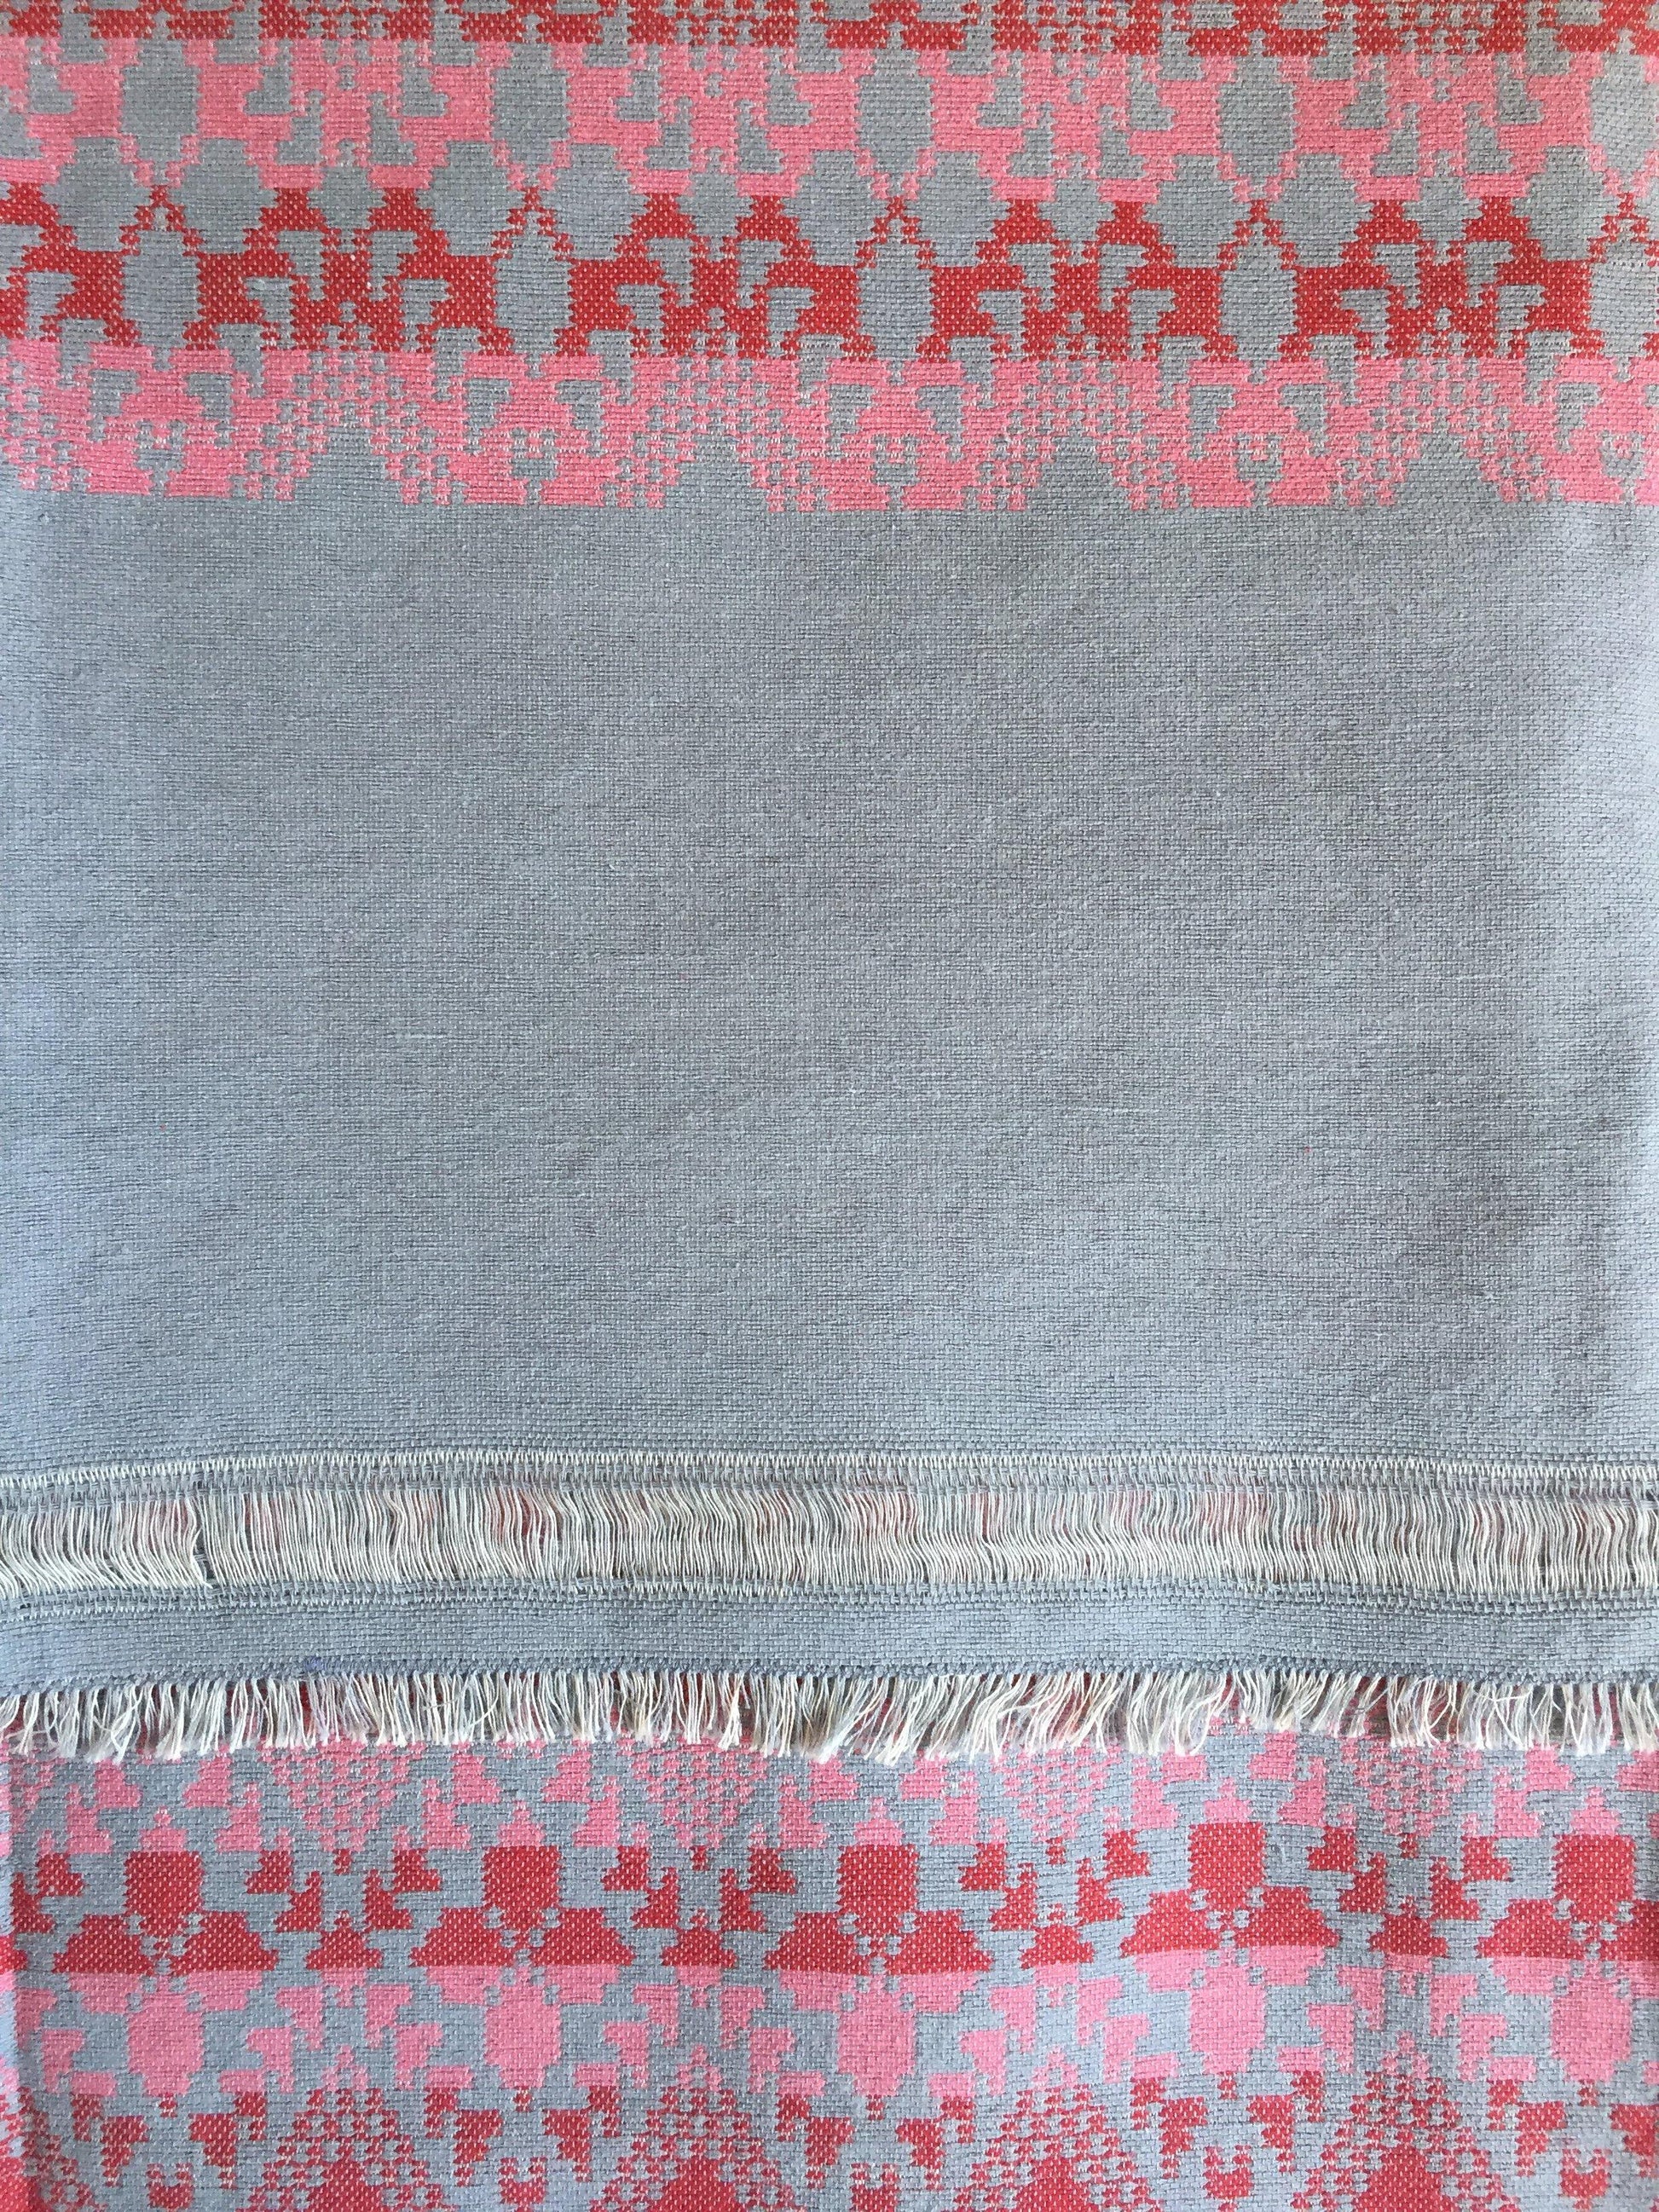 Handwoven Egyptian Cotton Bedcover: Gray & Rosewood Diamonds - Double/Queen